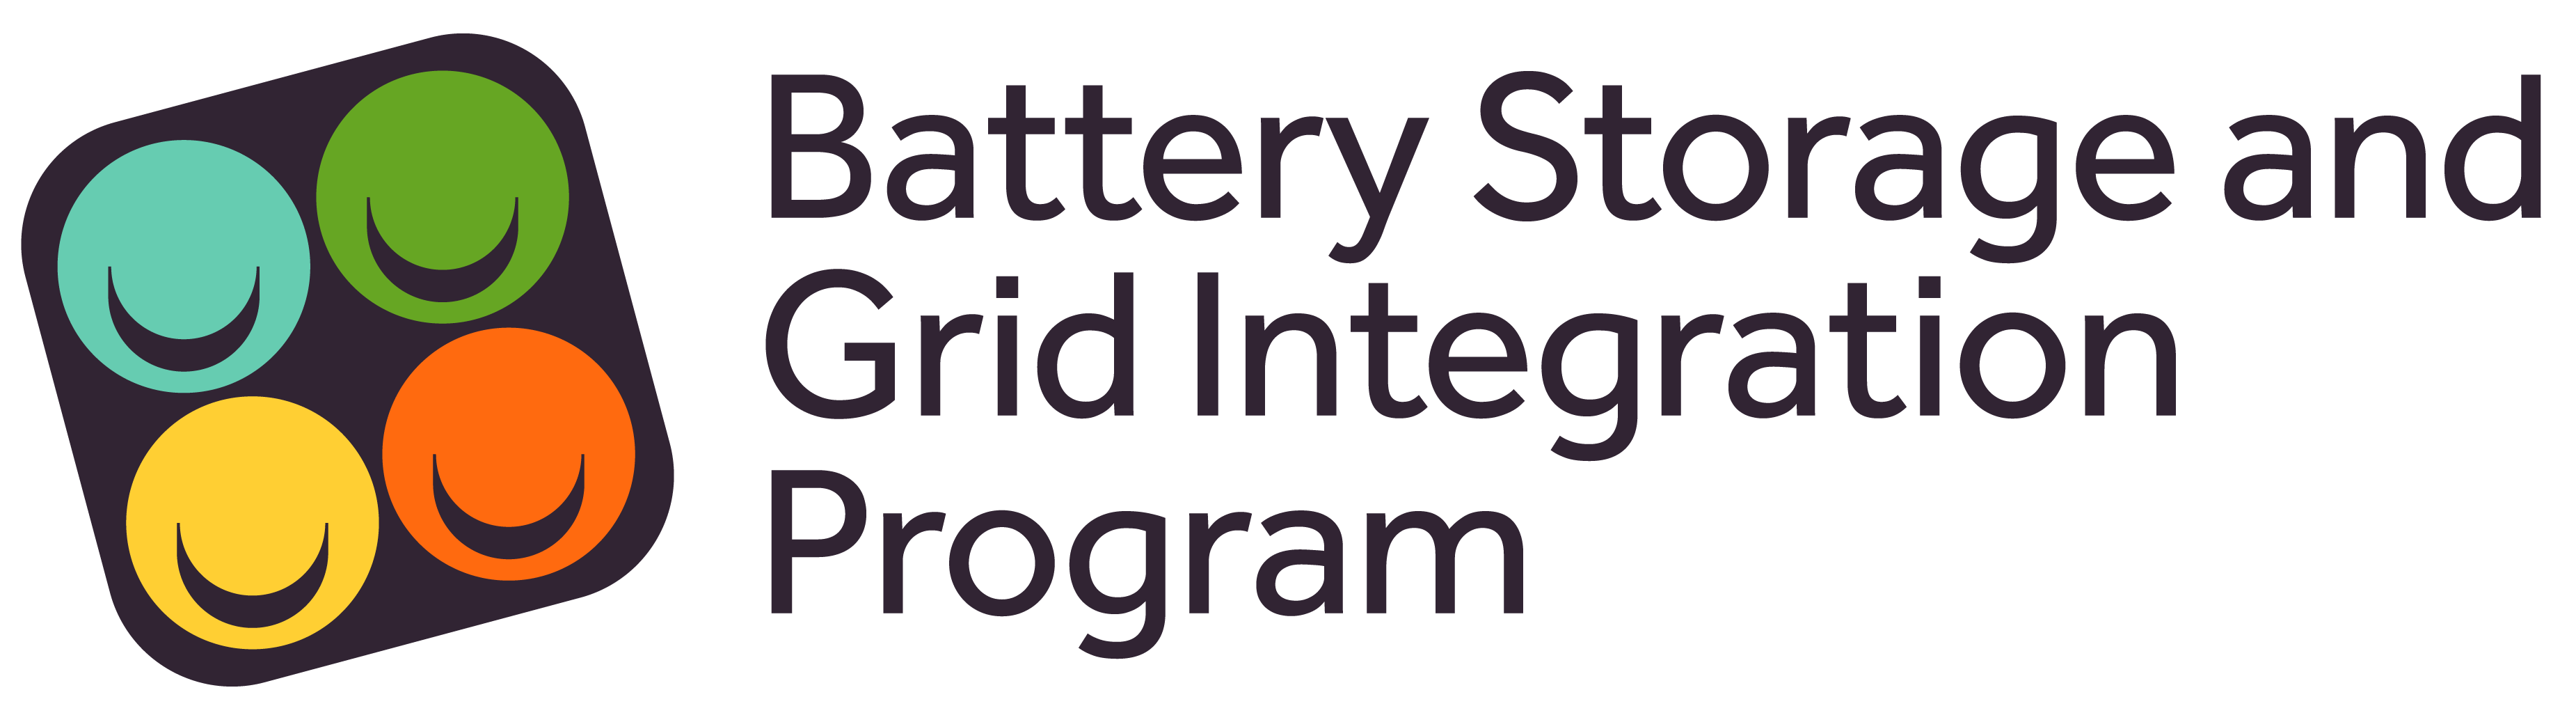 Battery Storage and Grid Integration Program Logo